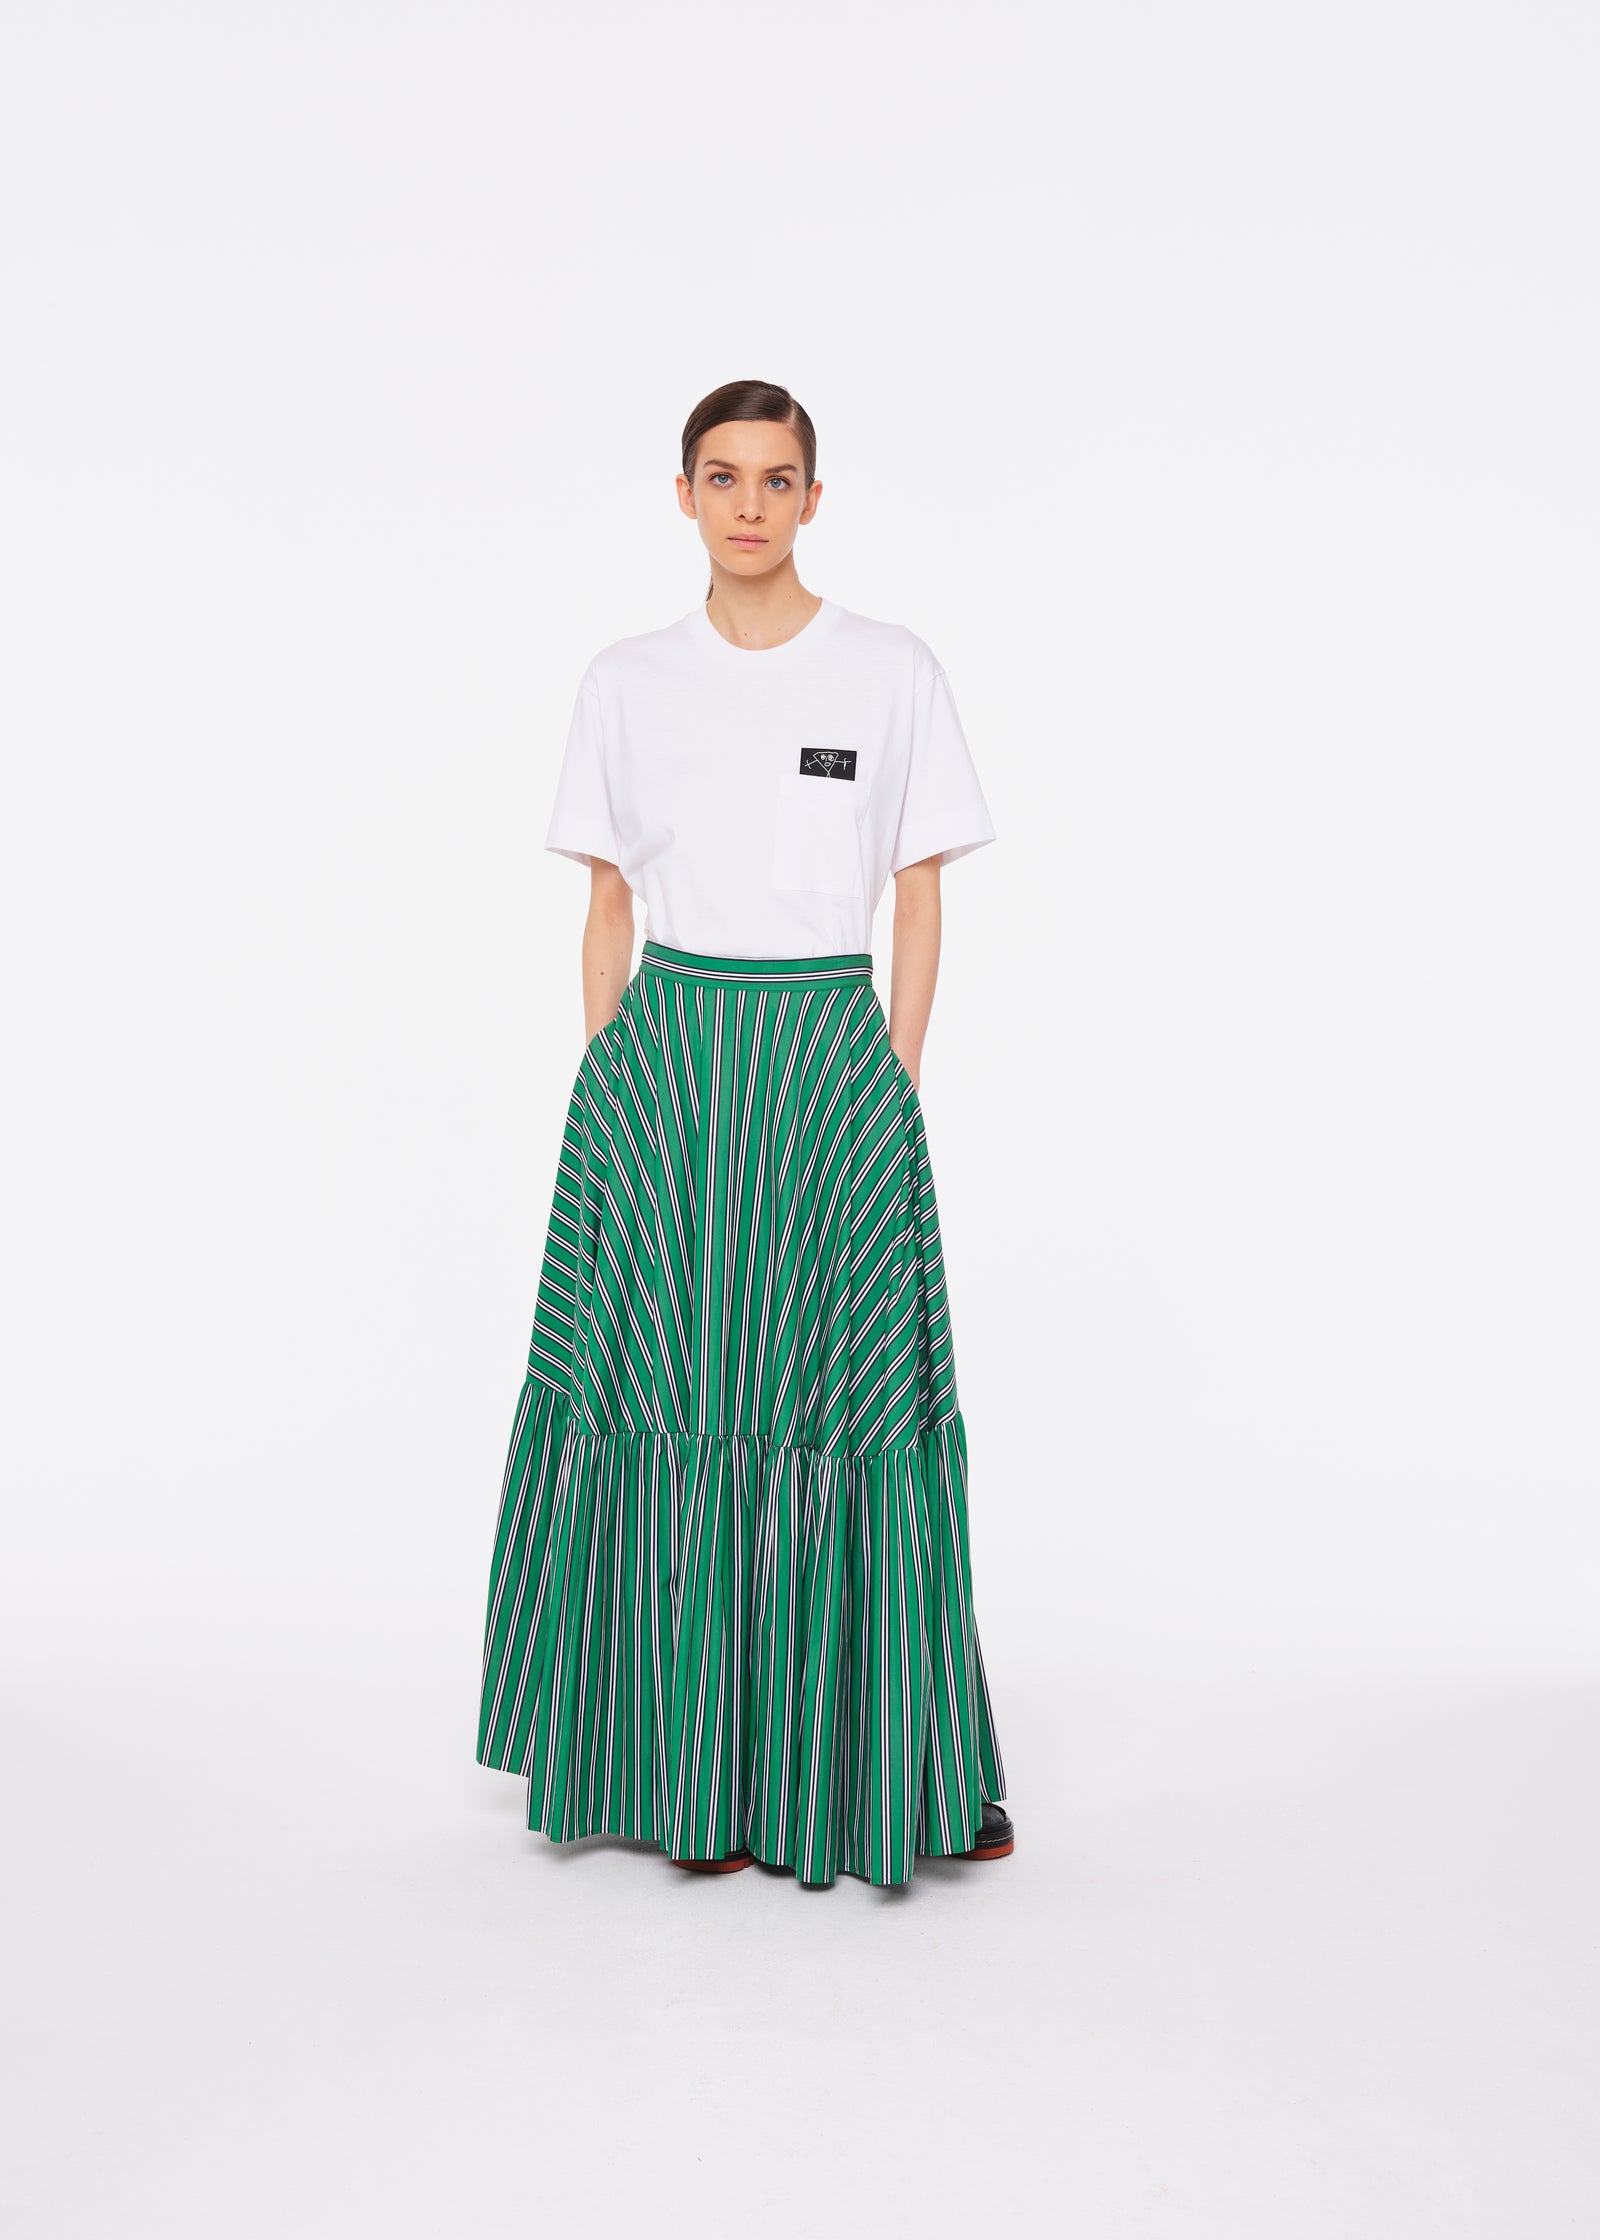 striped large skirt